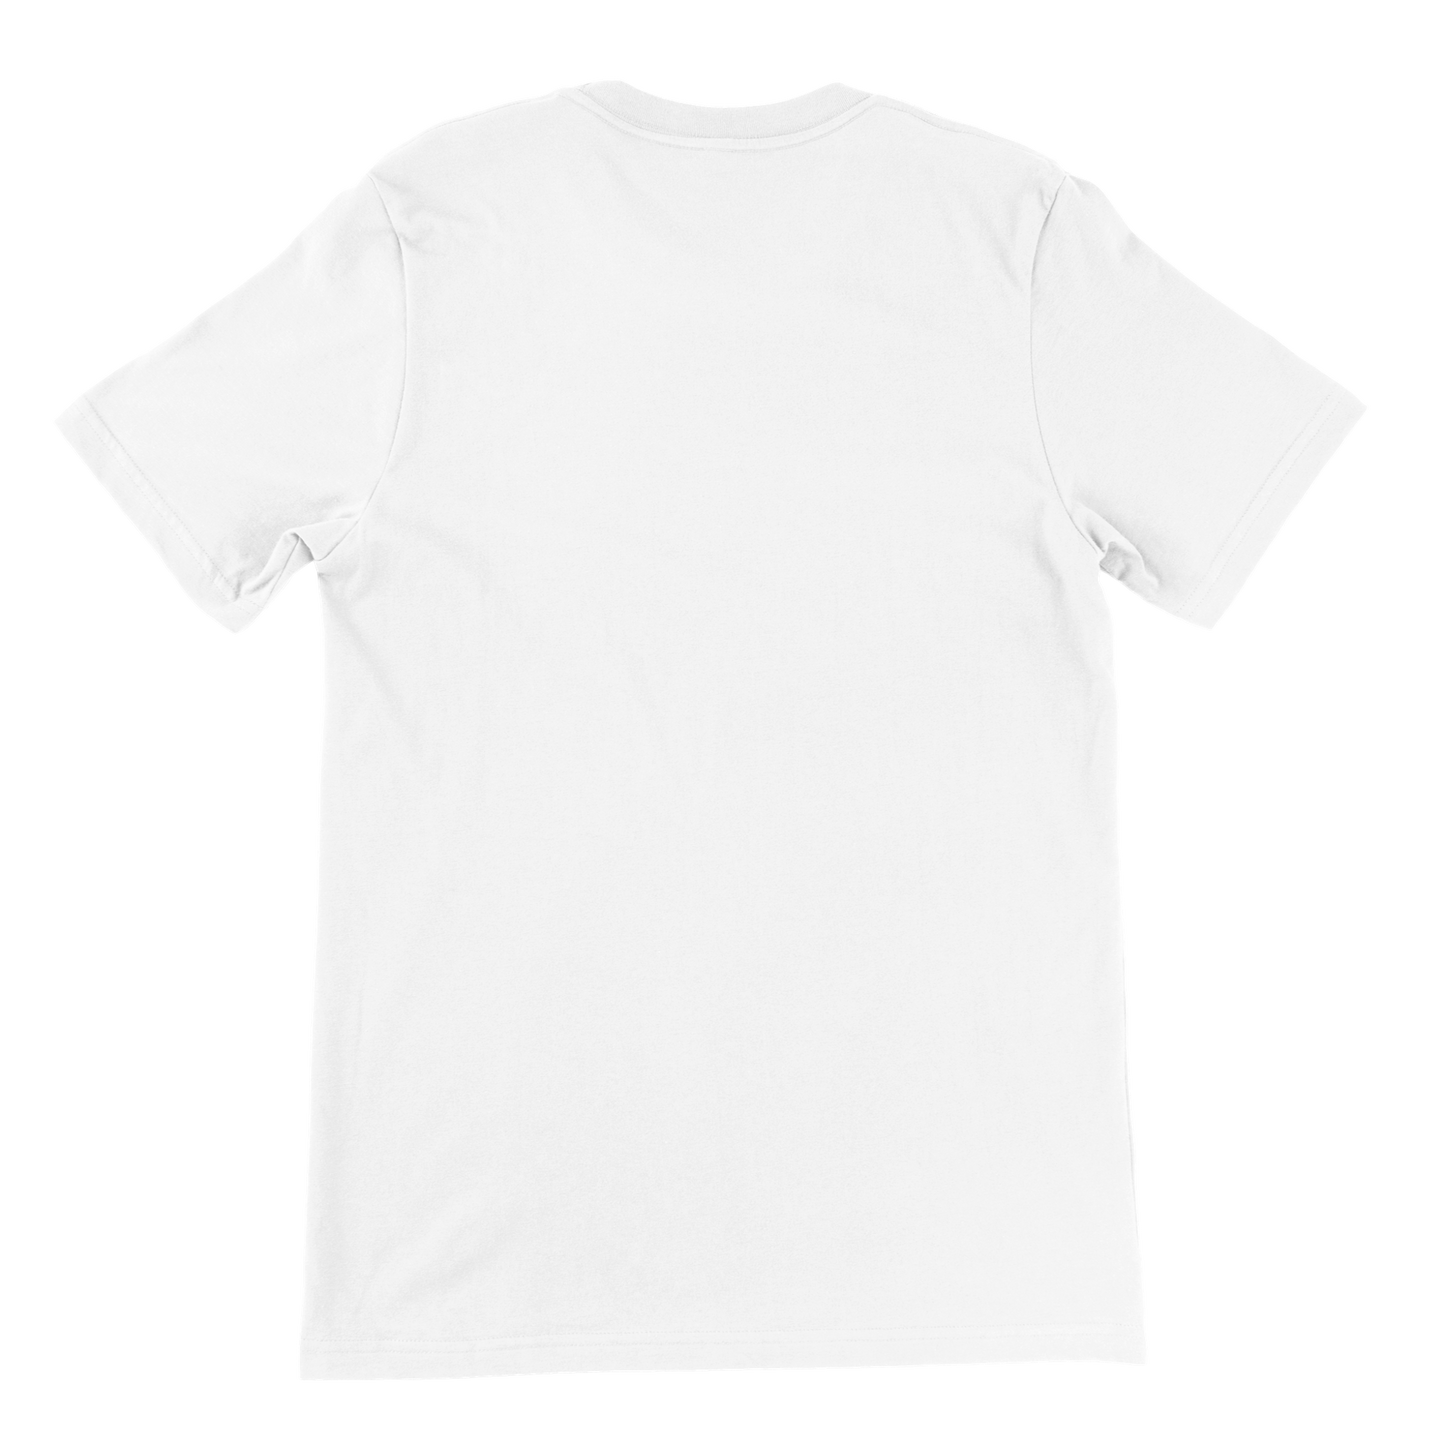 It is Monday Premium Unisex Crewneck T-shirt